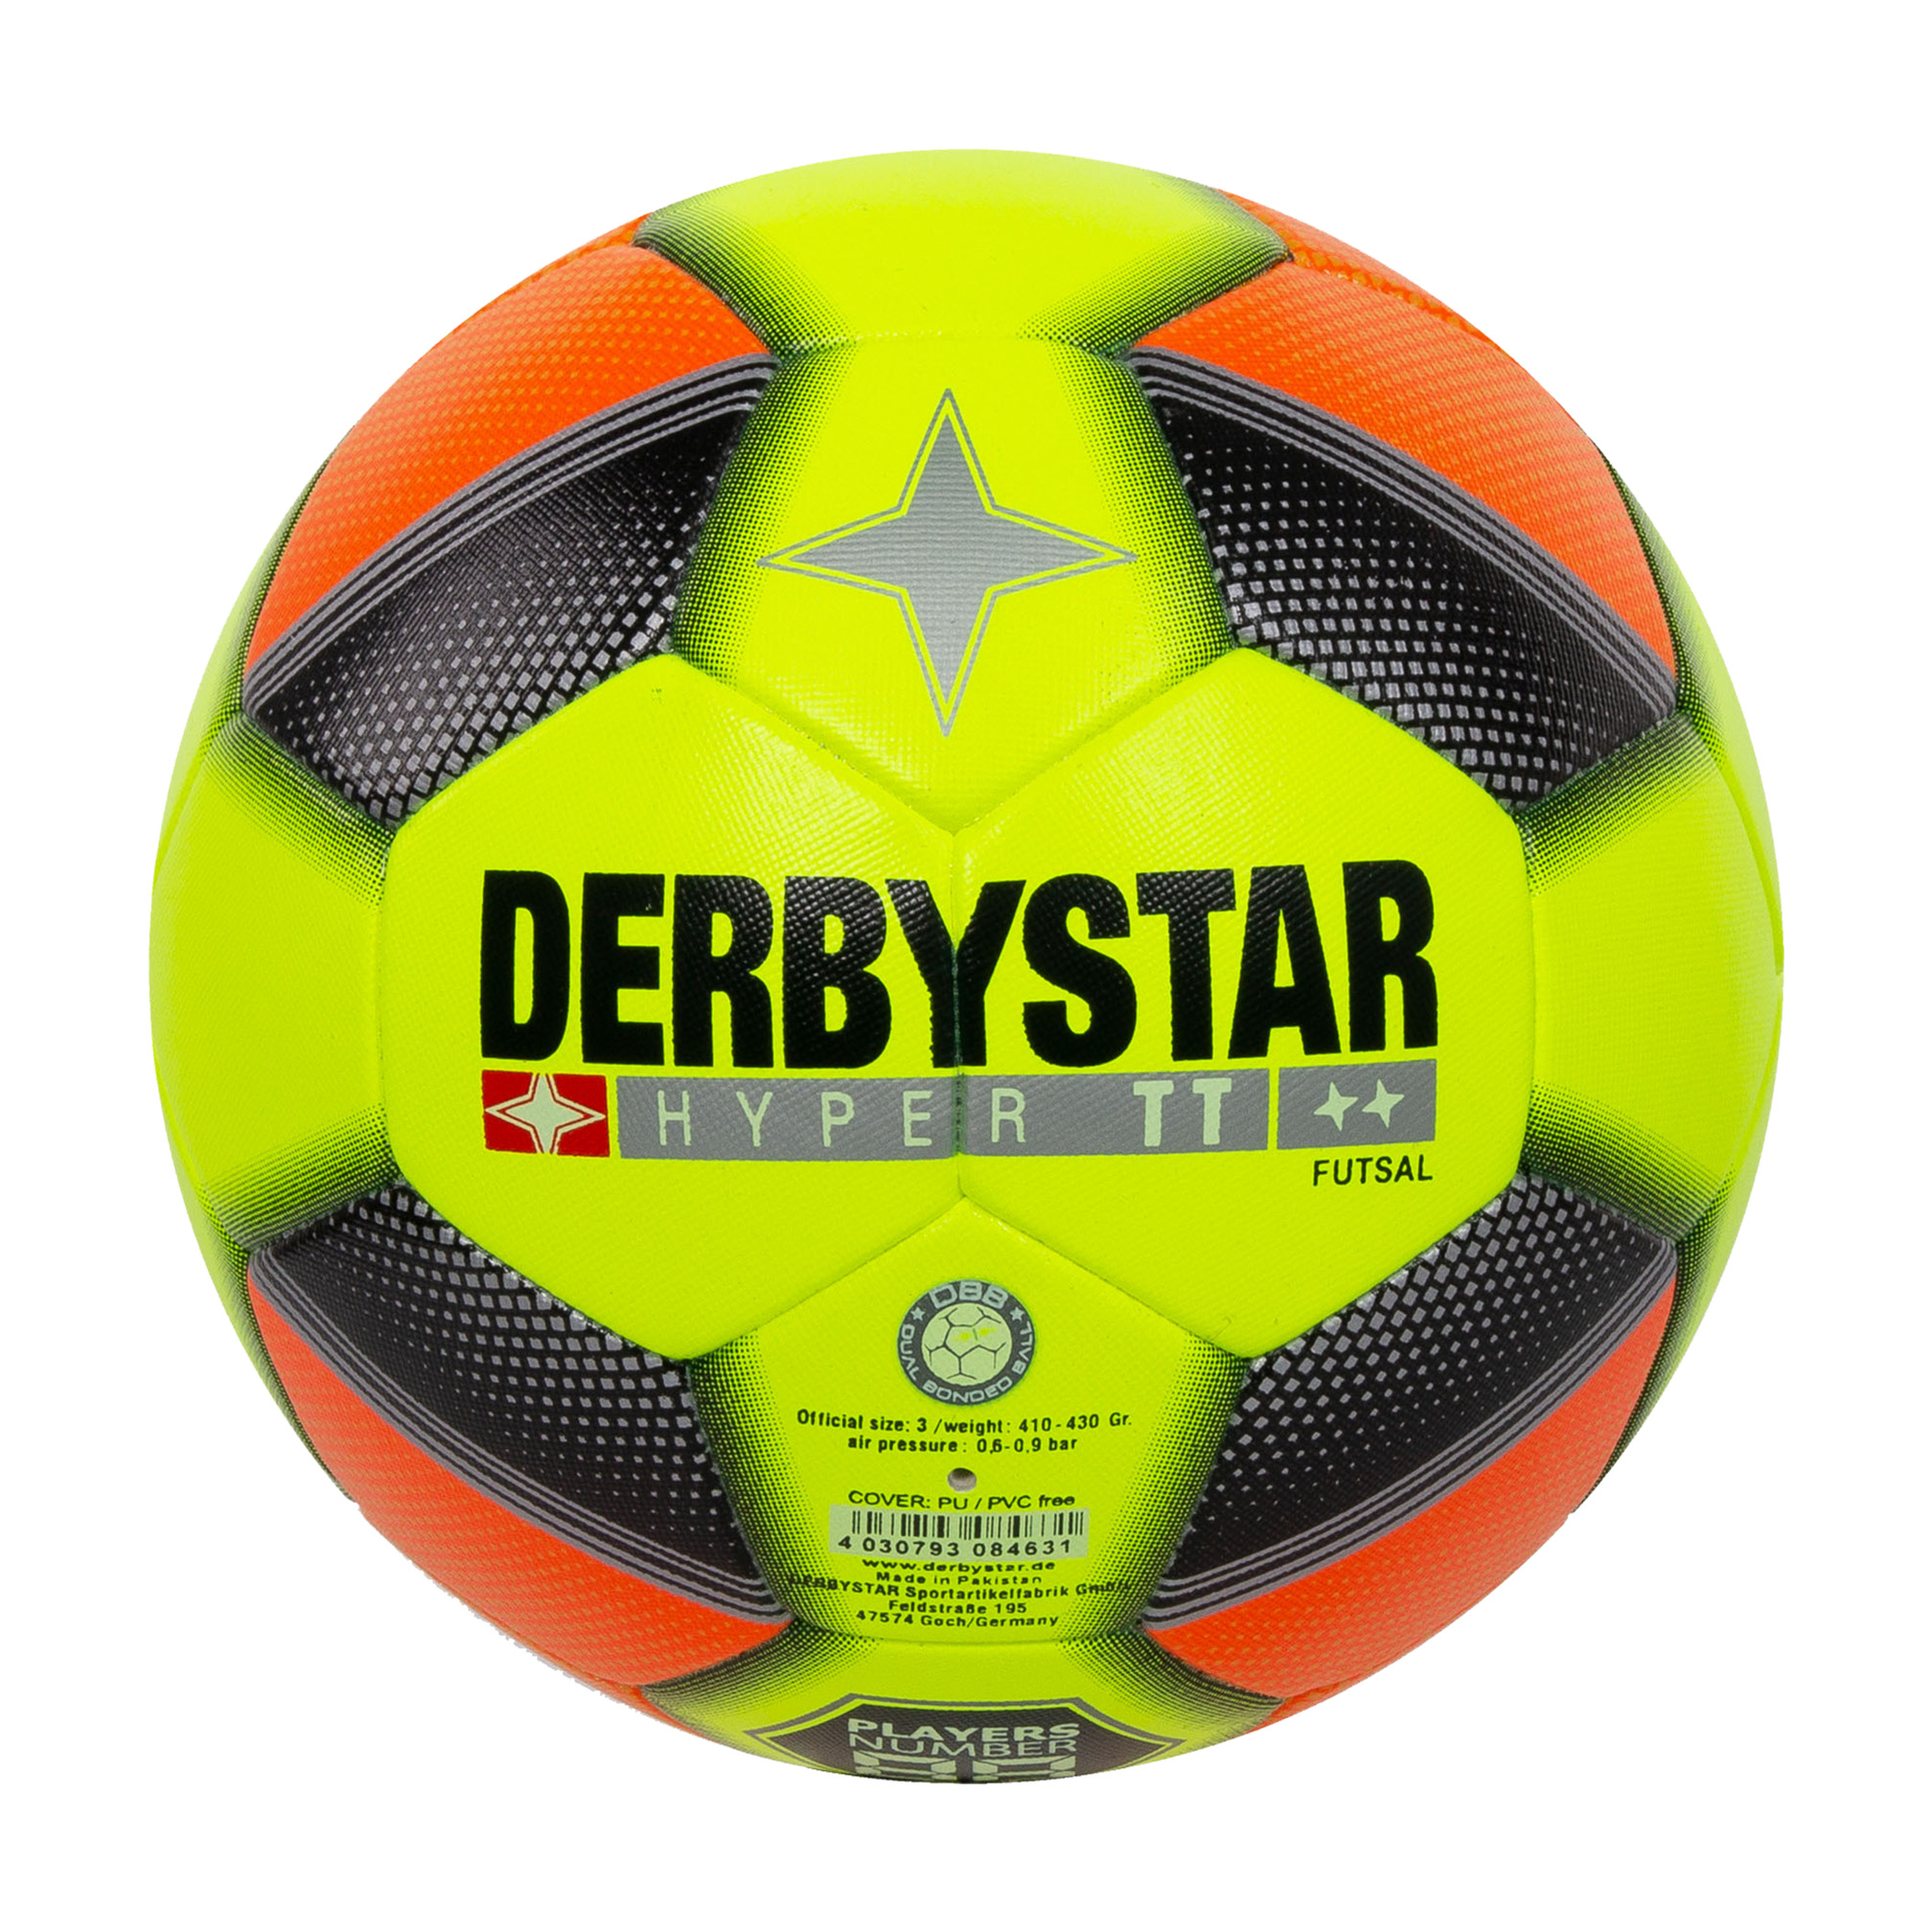 Balle Derbystar Futsal Hyper TT